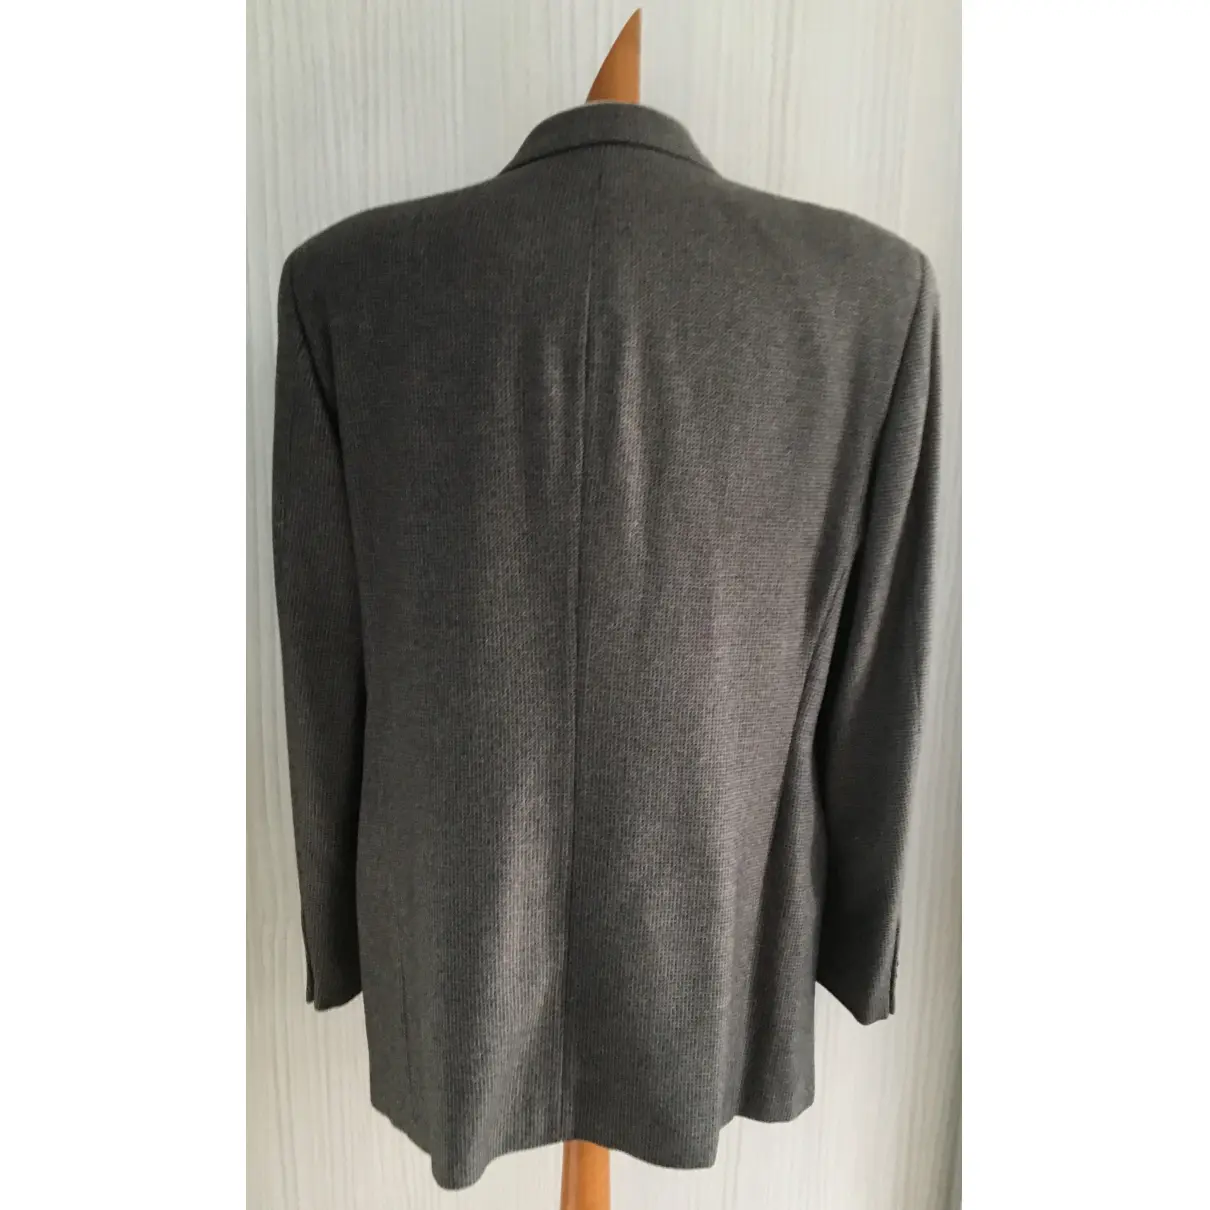 Buy Armani Collezioni Wool jacket online